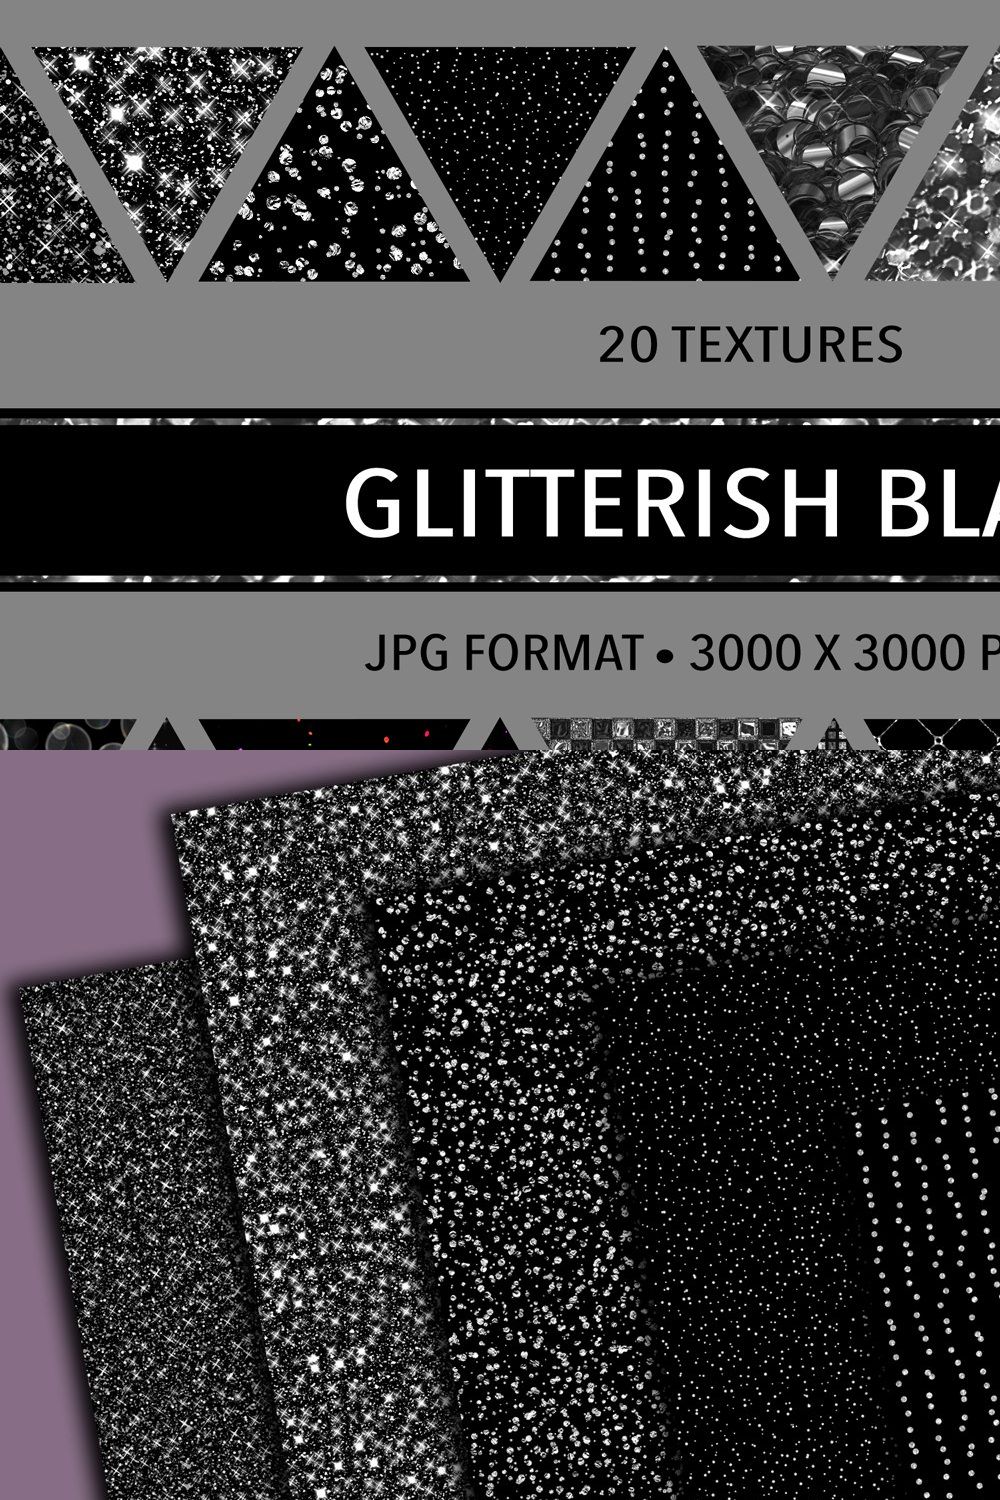 Glitterish Black pinterest preview image.